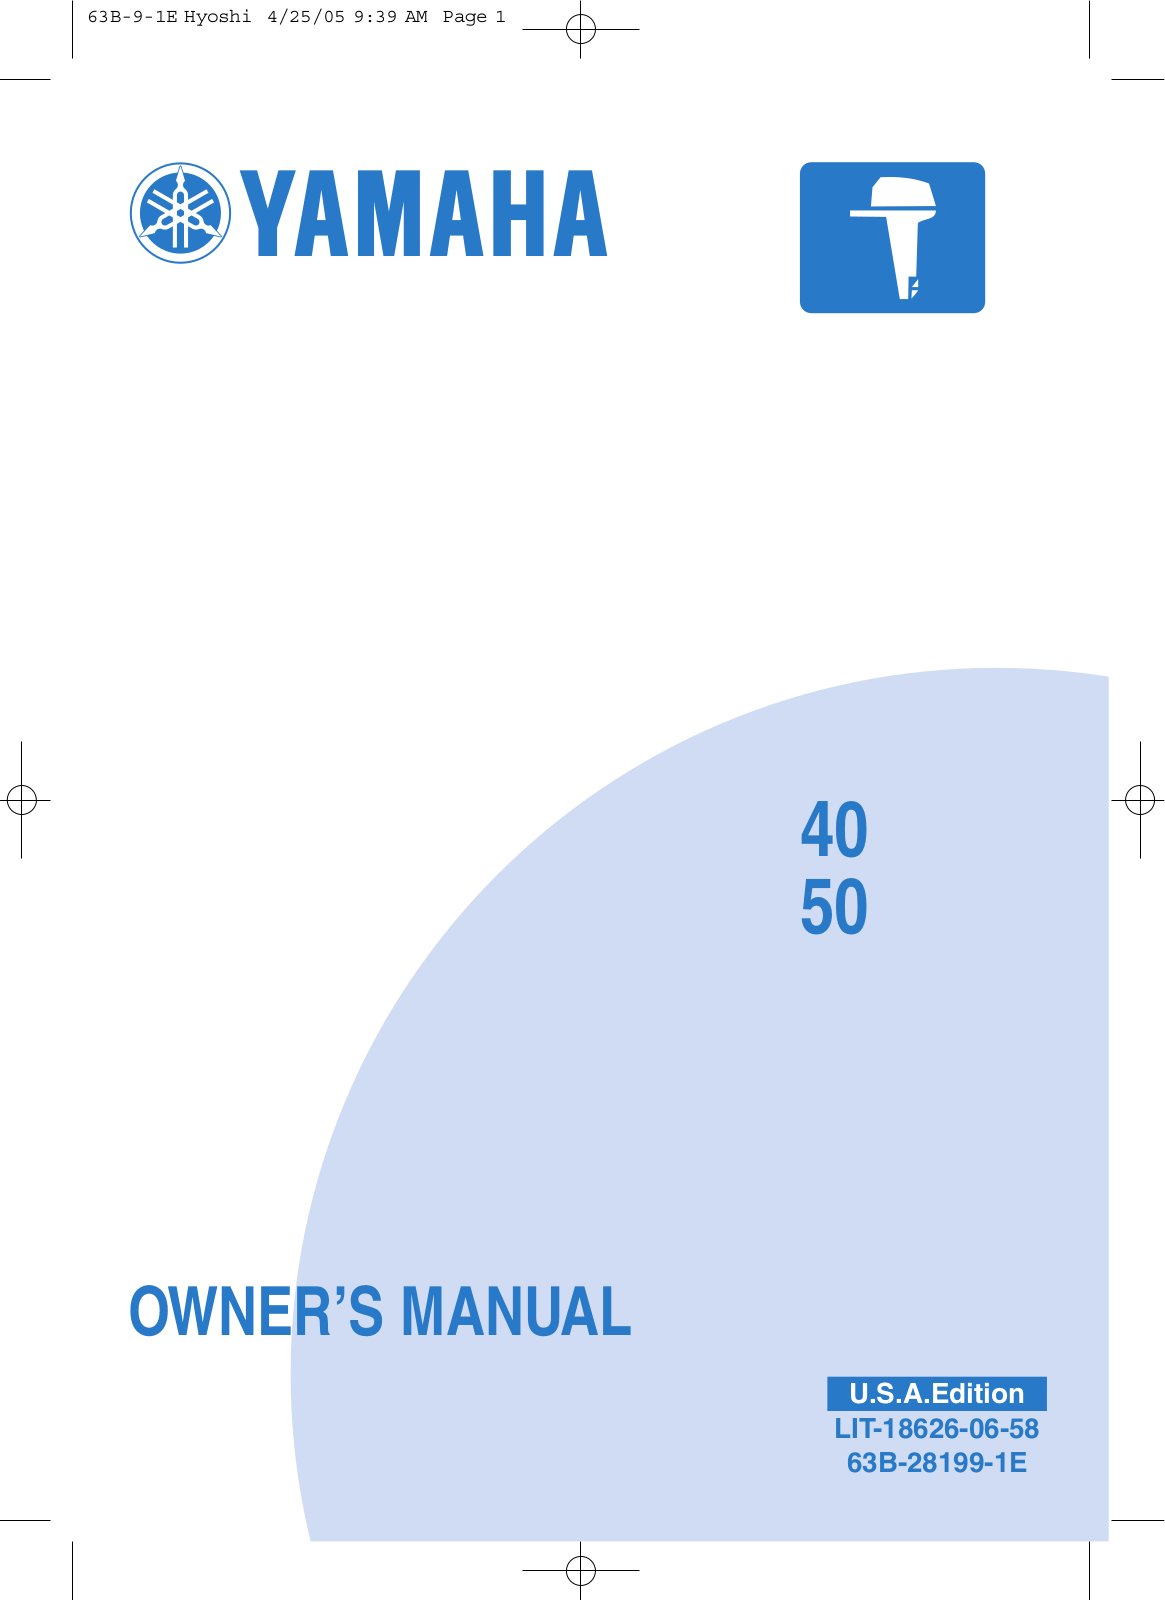 Yamaha 40 User Manual